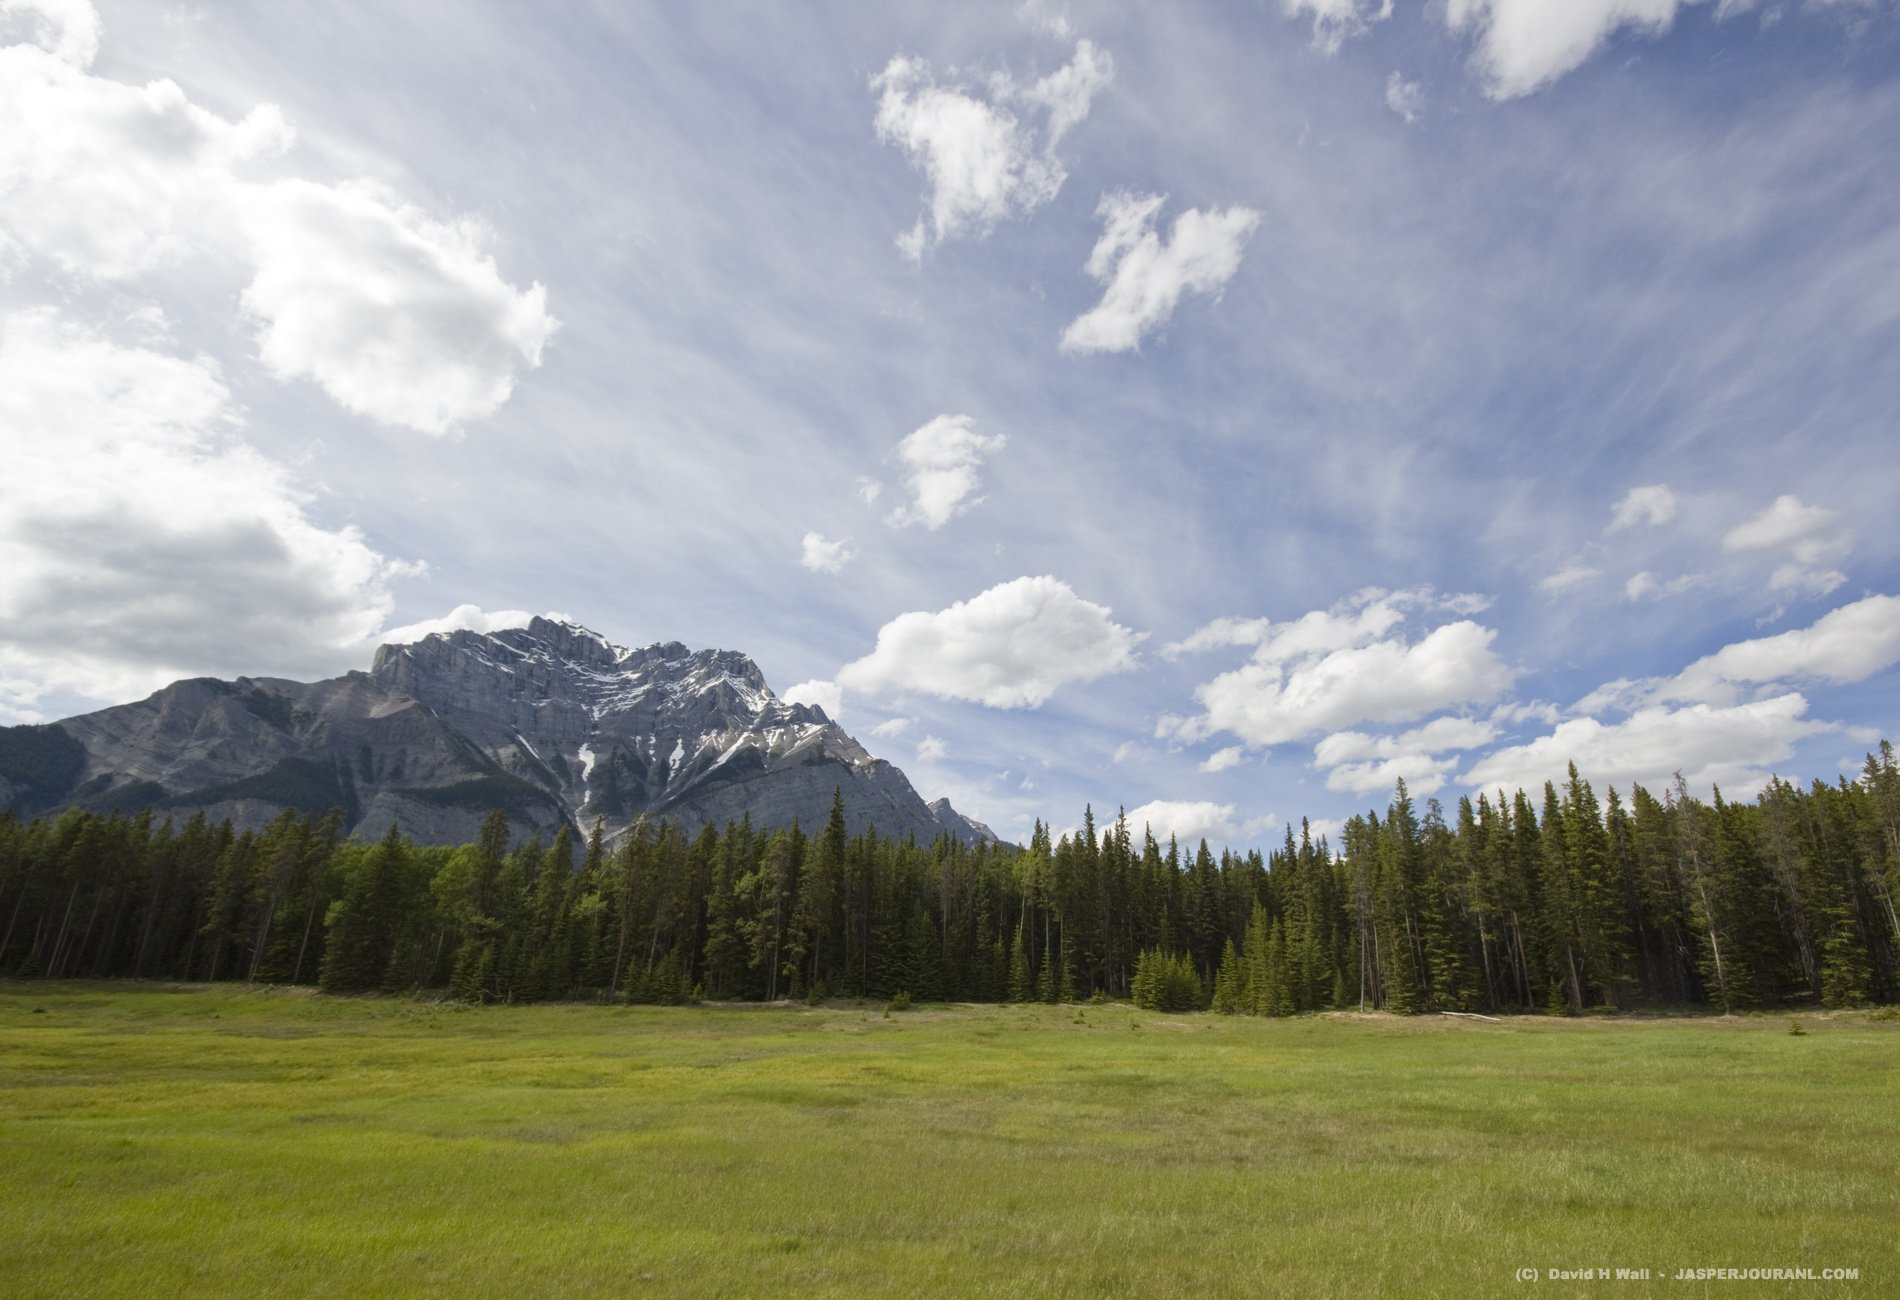 Banff National Park desktop wallpaper   click image to view full size 1900x1300